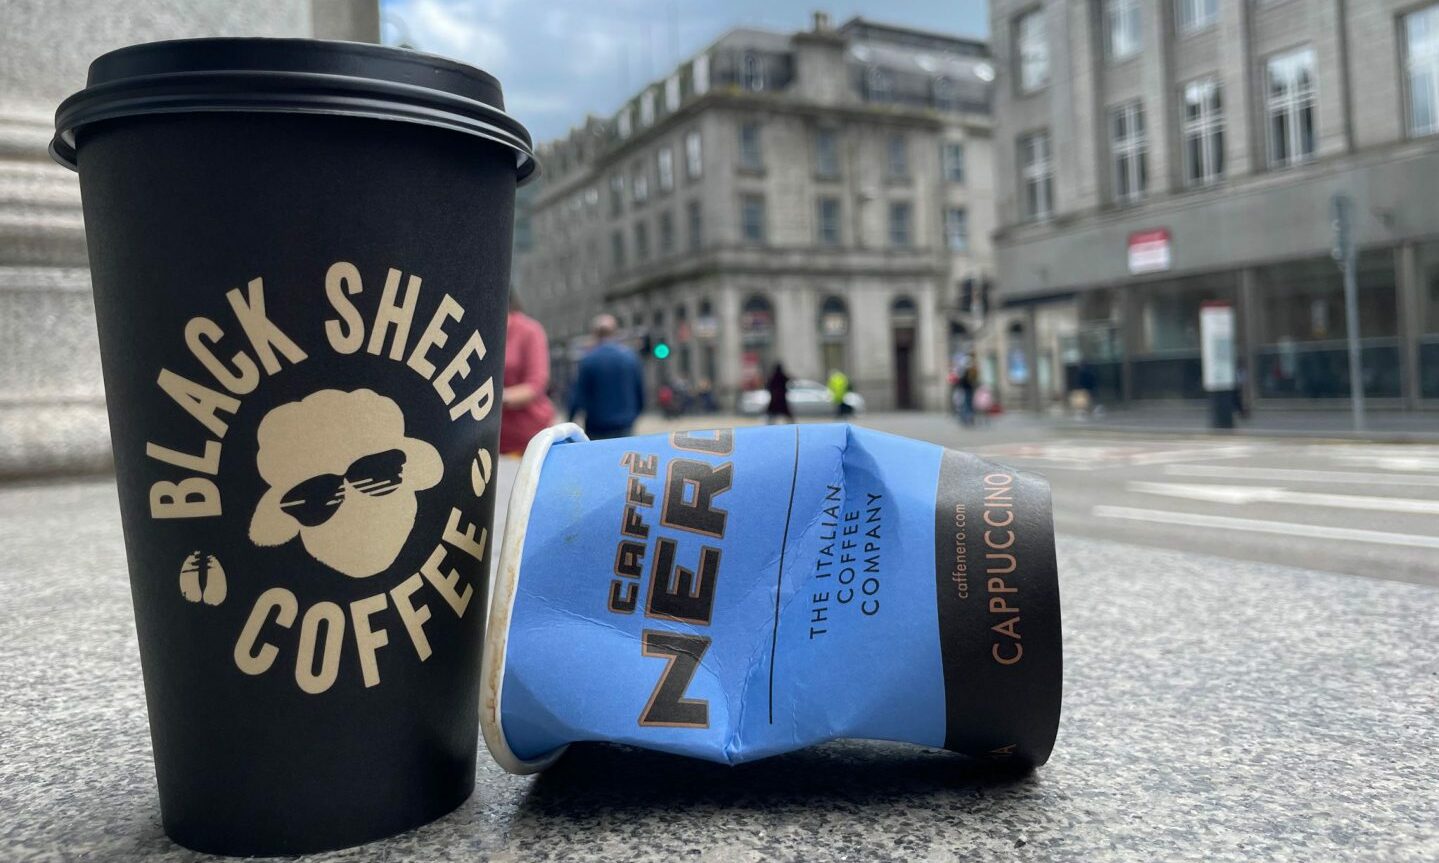 Black Sheep Coffee and Caffe Nero cups on Union Street 